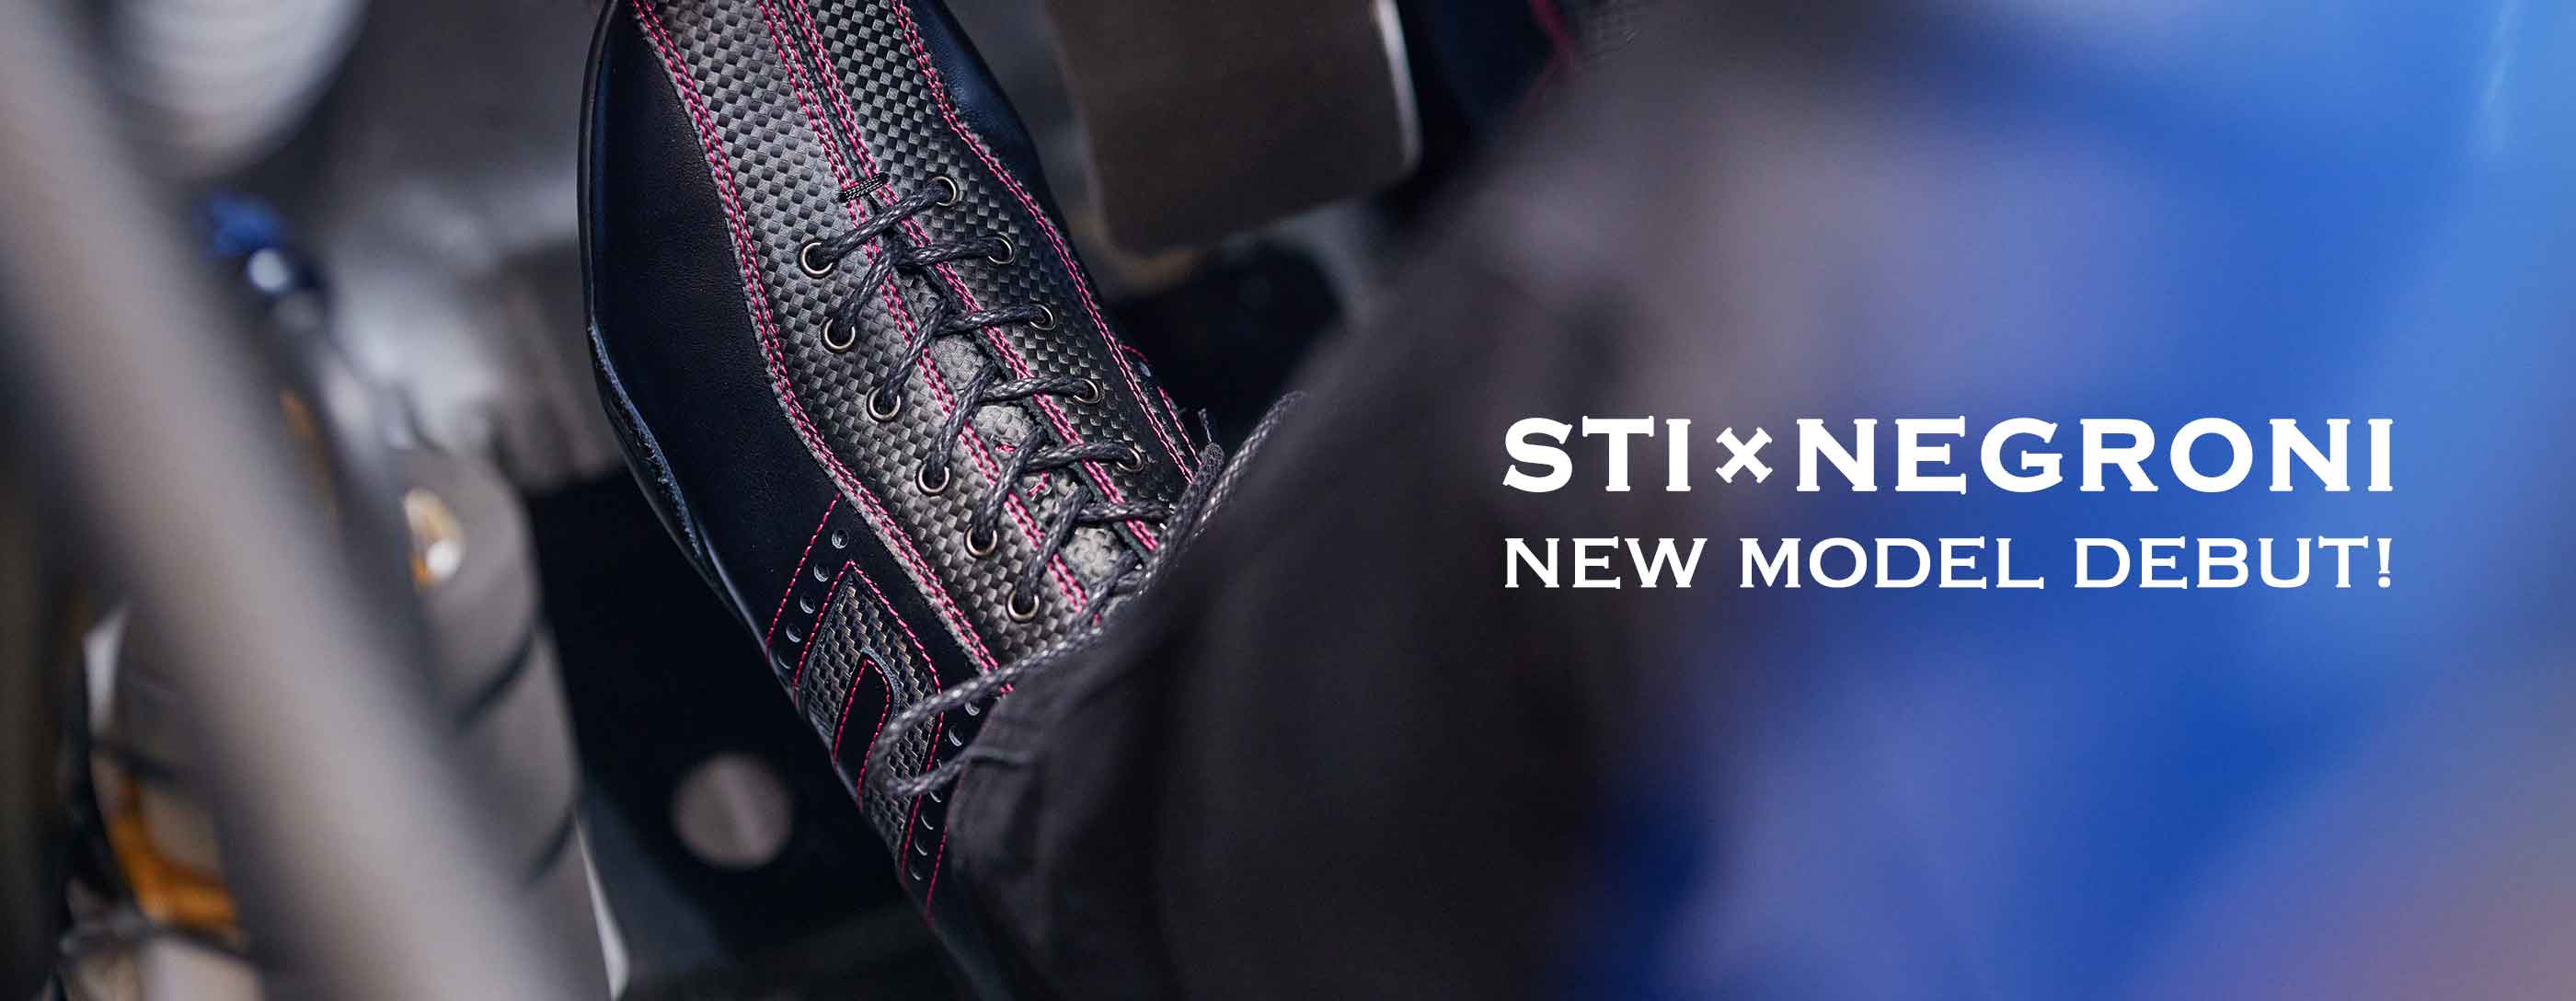 STI×NEGRONI ドライビングシューズに新色のスニーカータイプが新登場！